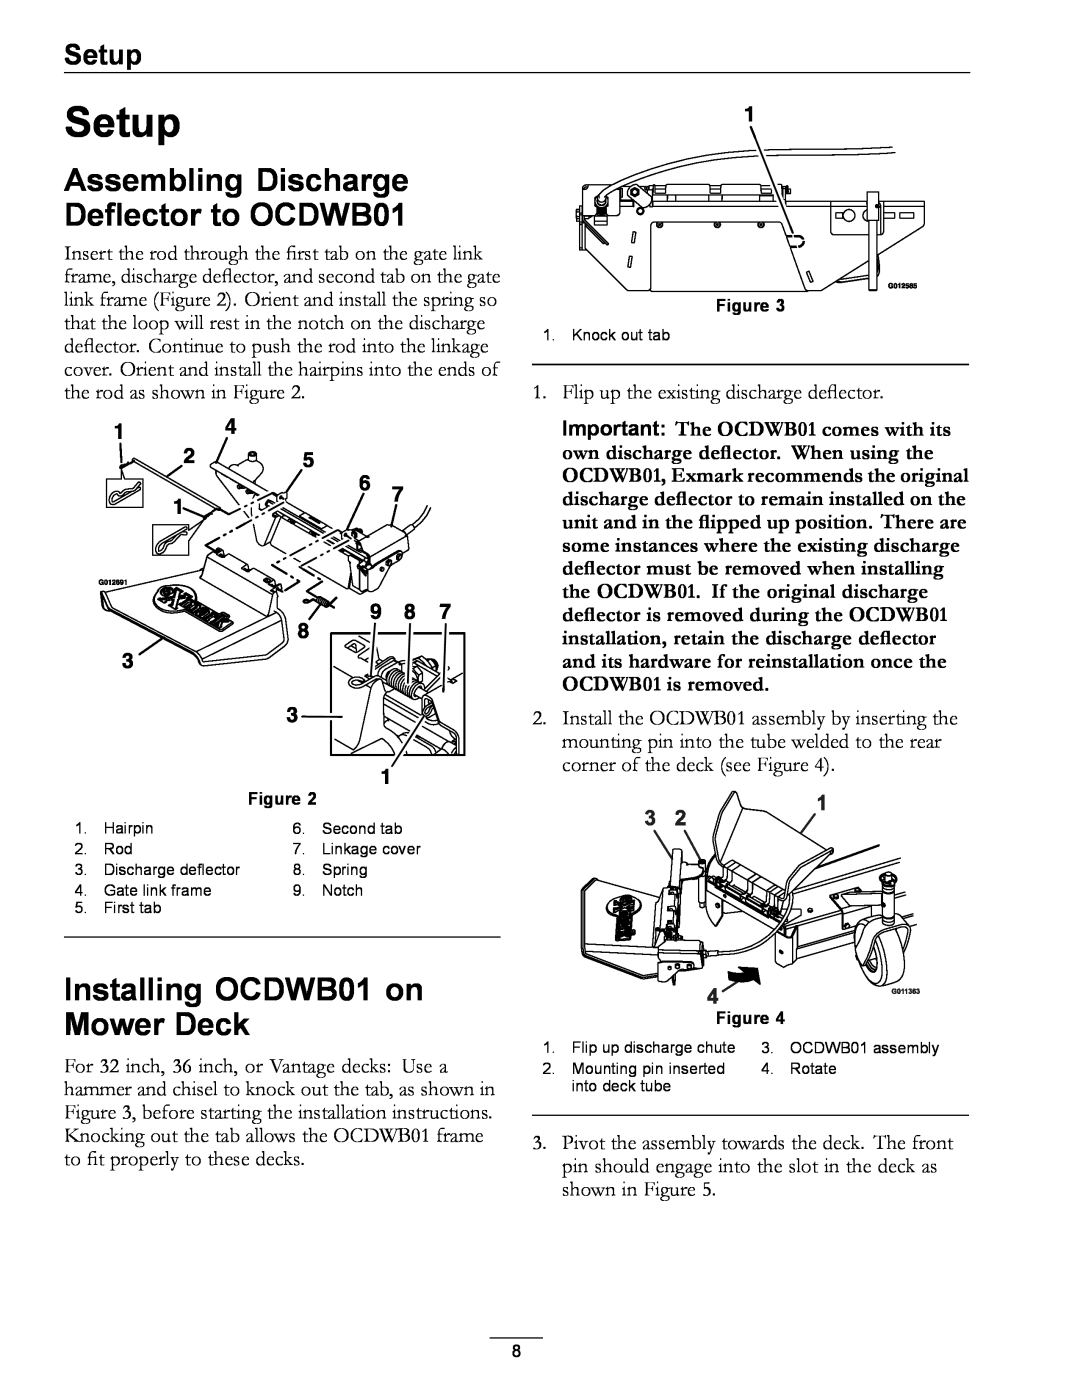 Exmark manual Setup, Assembling Discharge Deflector to OCDWB01, Installing OCDWB01 on Mower Deck 